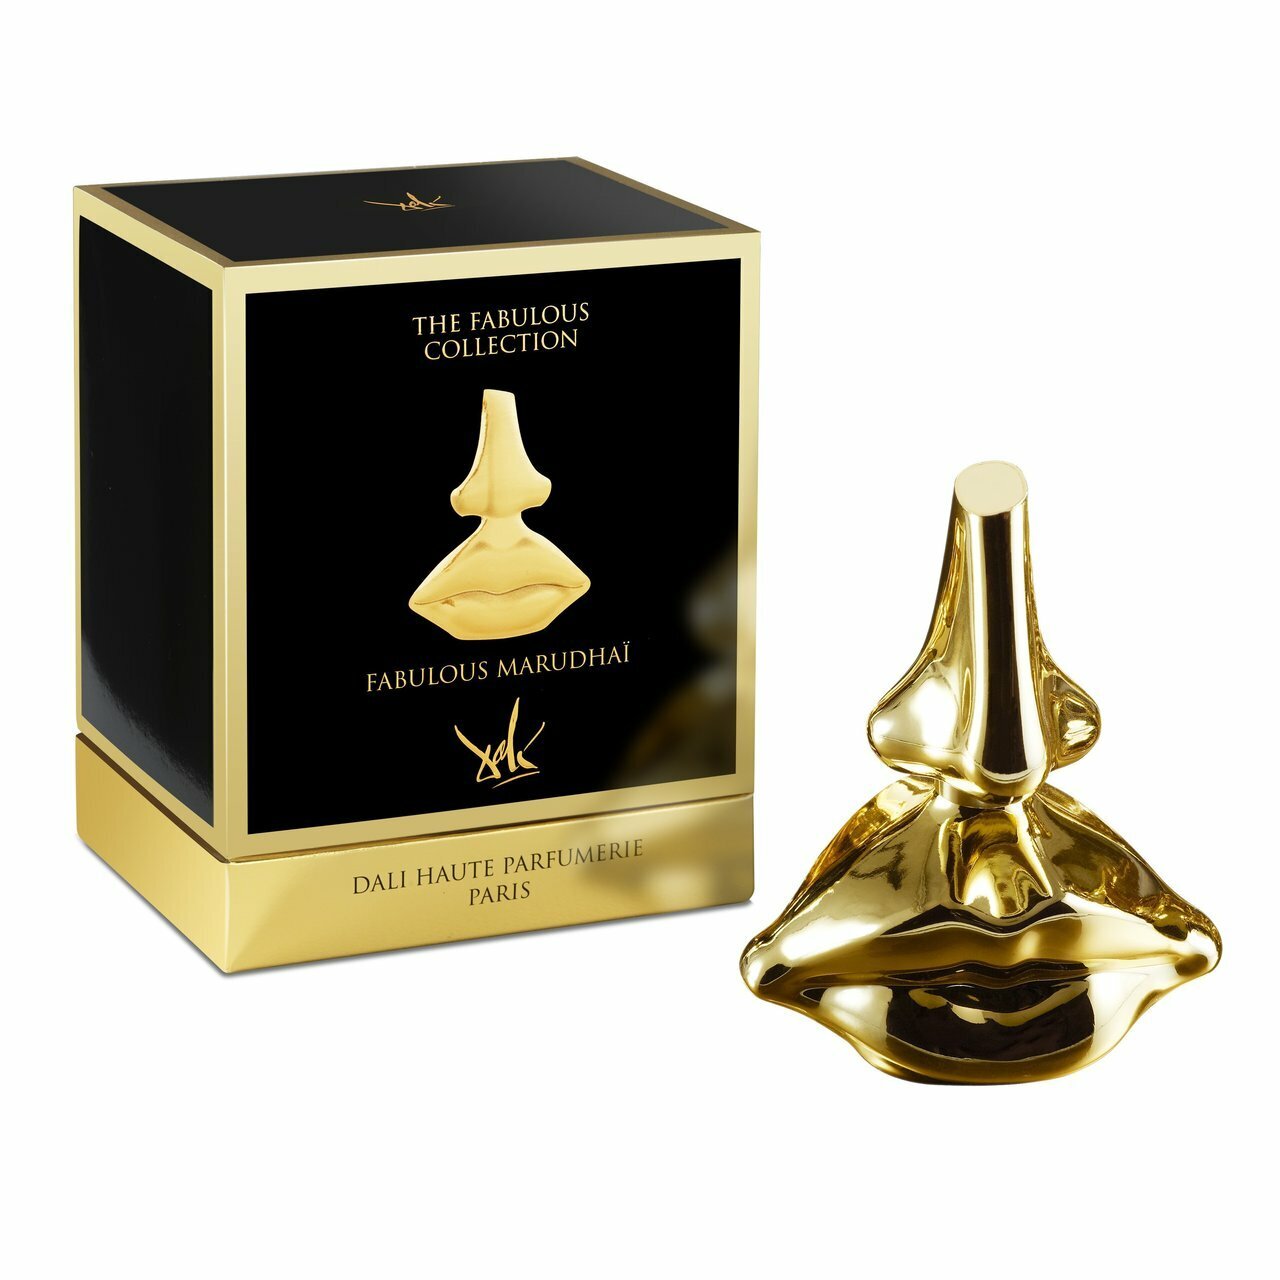 Dali Haute Parfumerie Fabulous Marudhai EDP 100ml